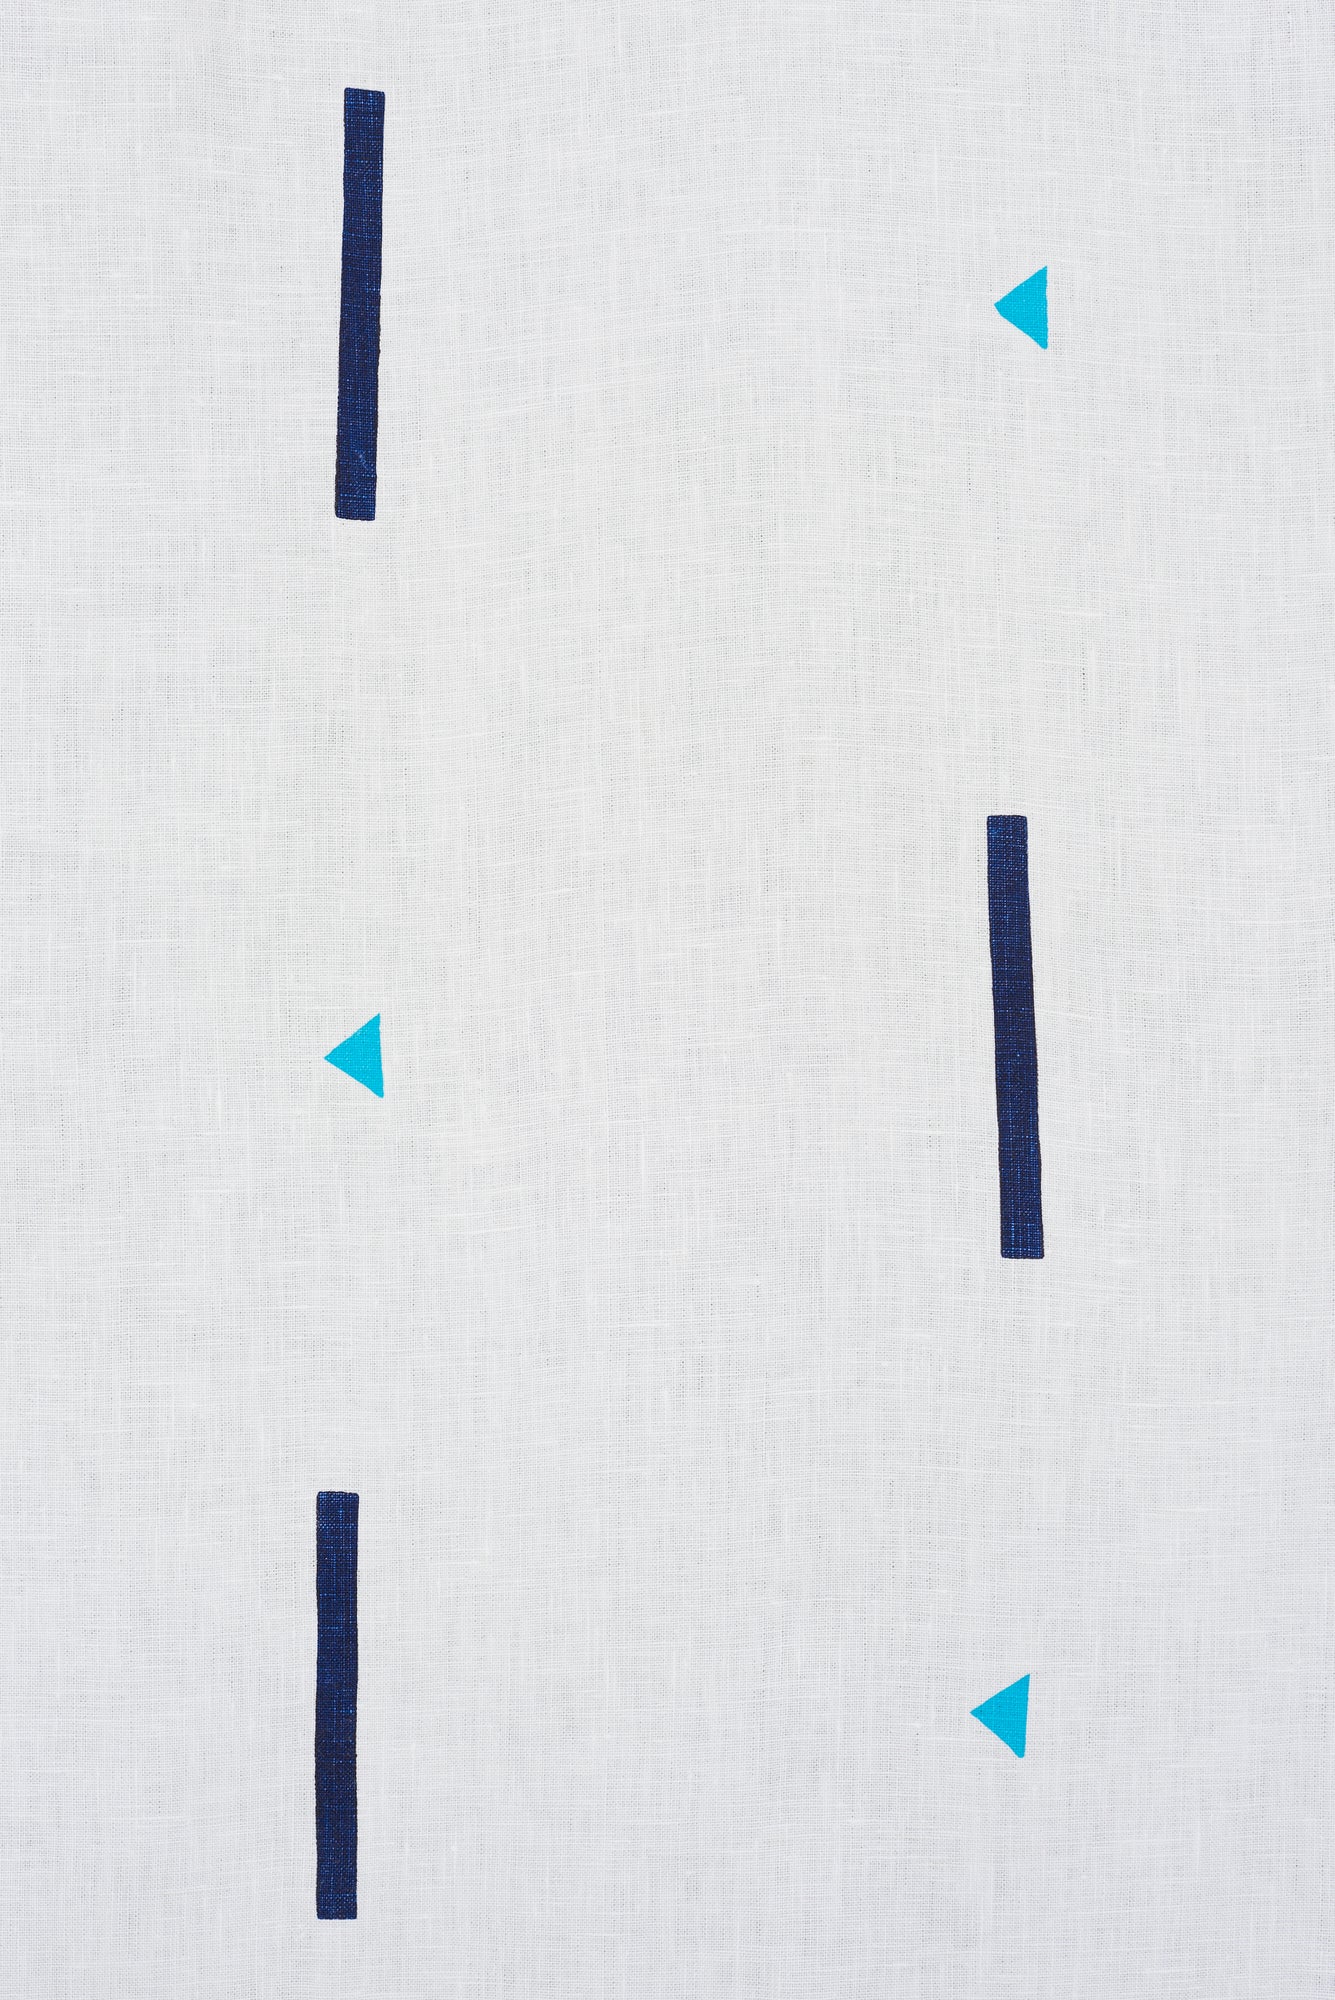 Tashmoo Turquoise & Navy - Fabric By The Yard